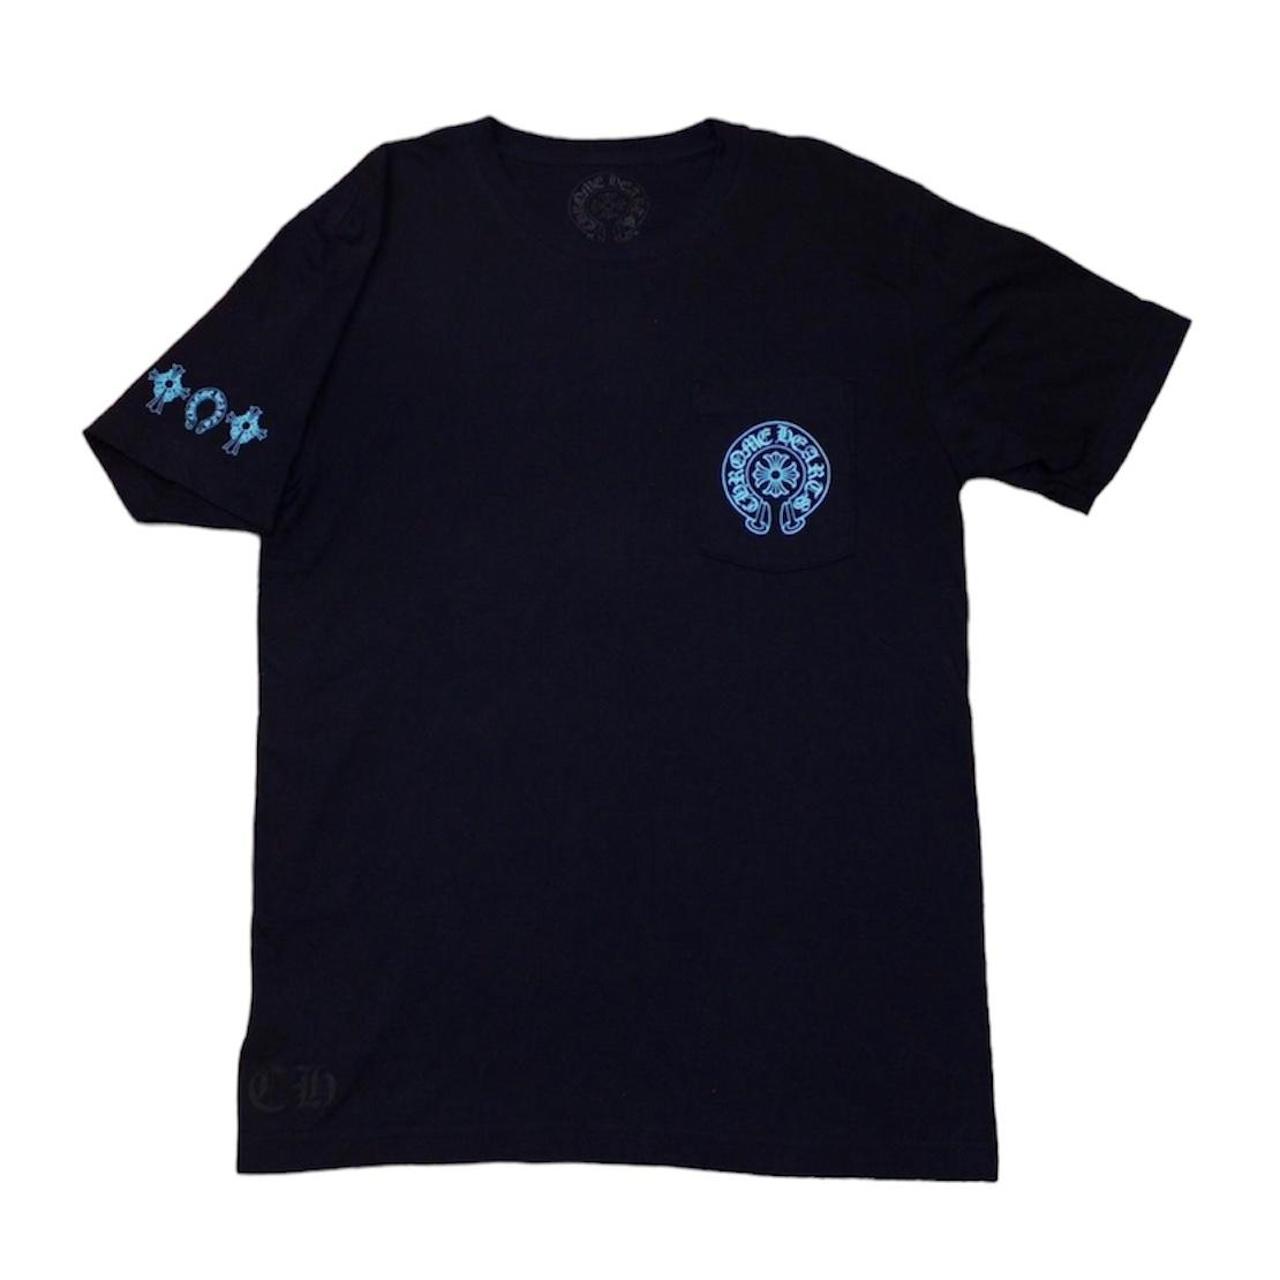 Chrome Hearts Men's Black and Blue T-shirt | Depop